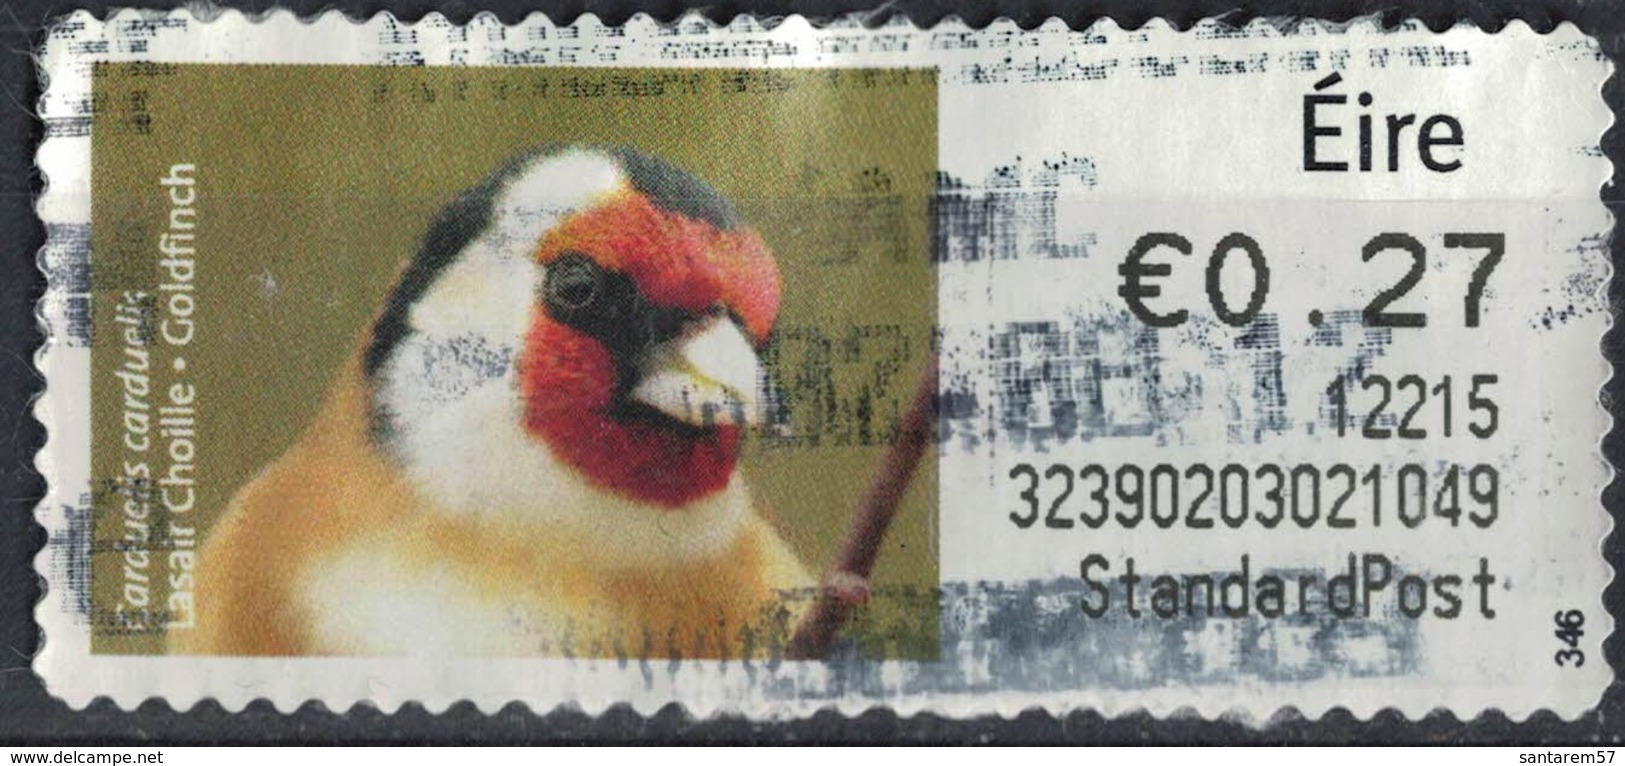 Irlande Vignette Oblitérée Bird Oiseau Chardonneret élégant Carduelis Carduelis SU - Automatenmarken (Frama)